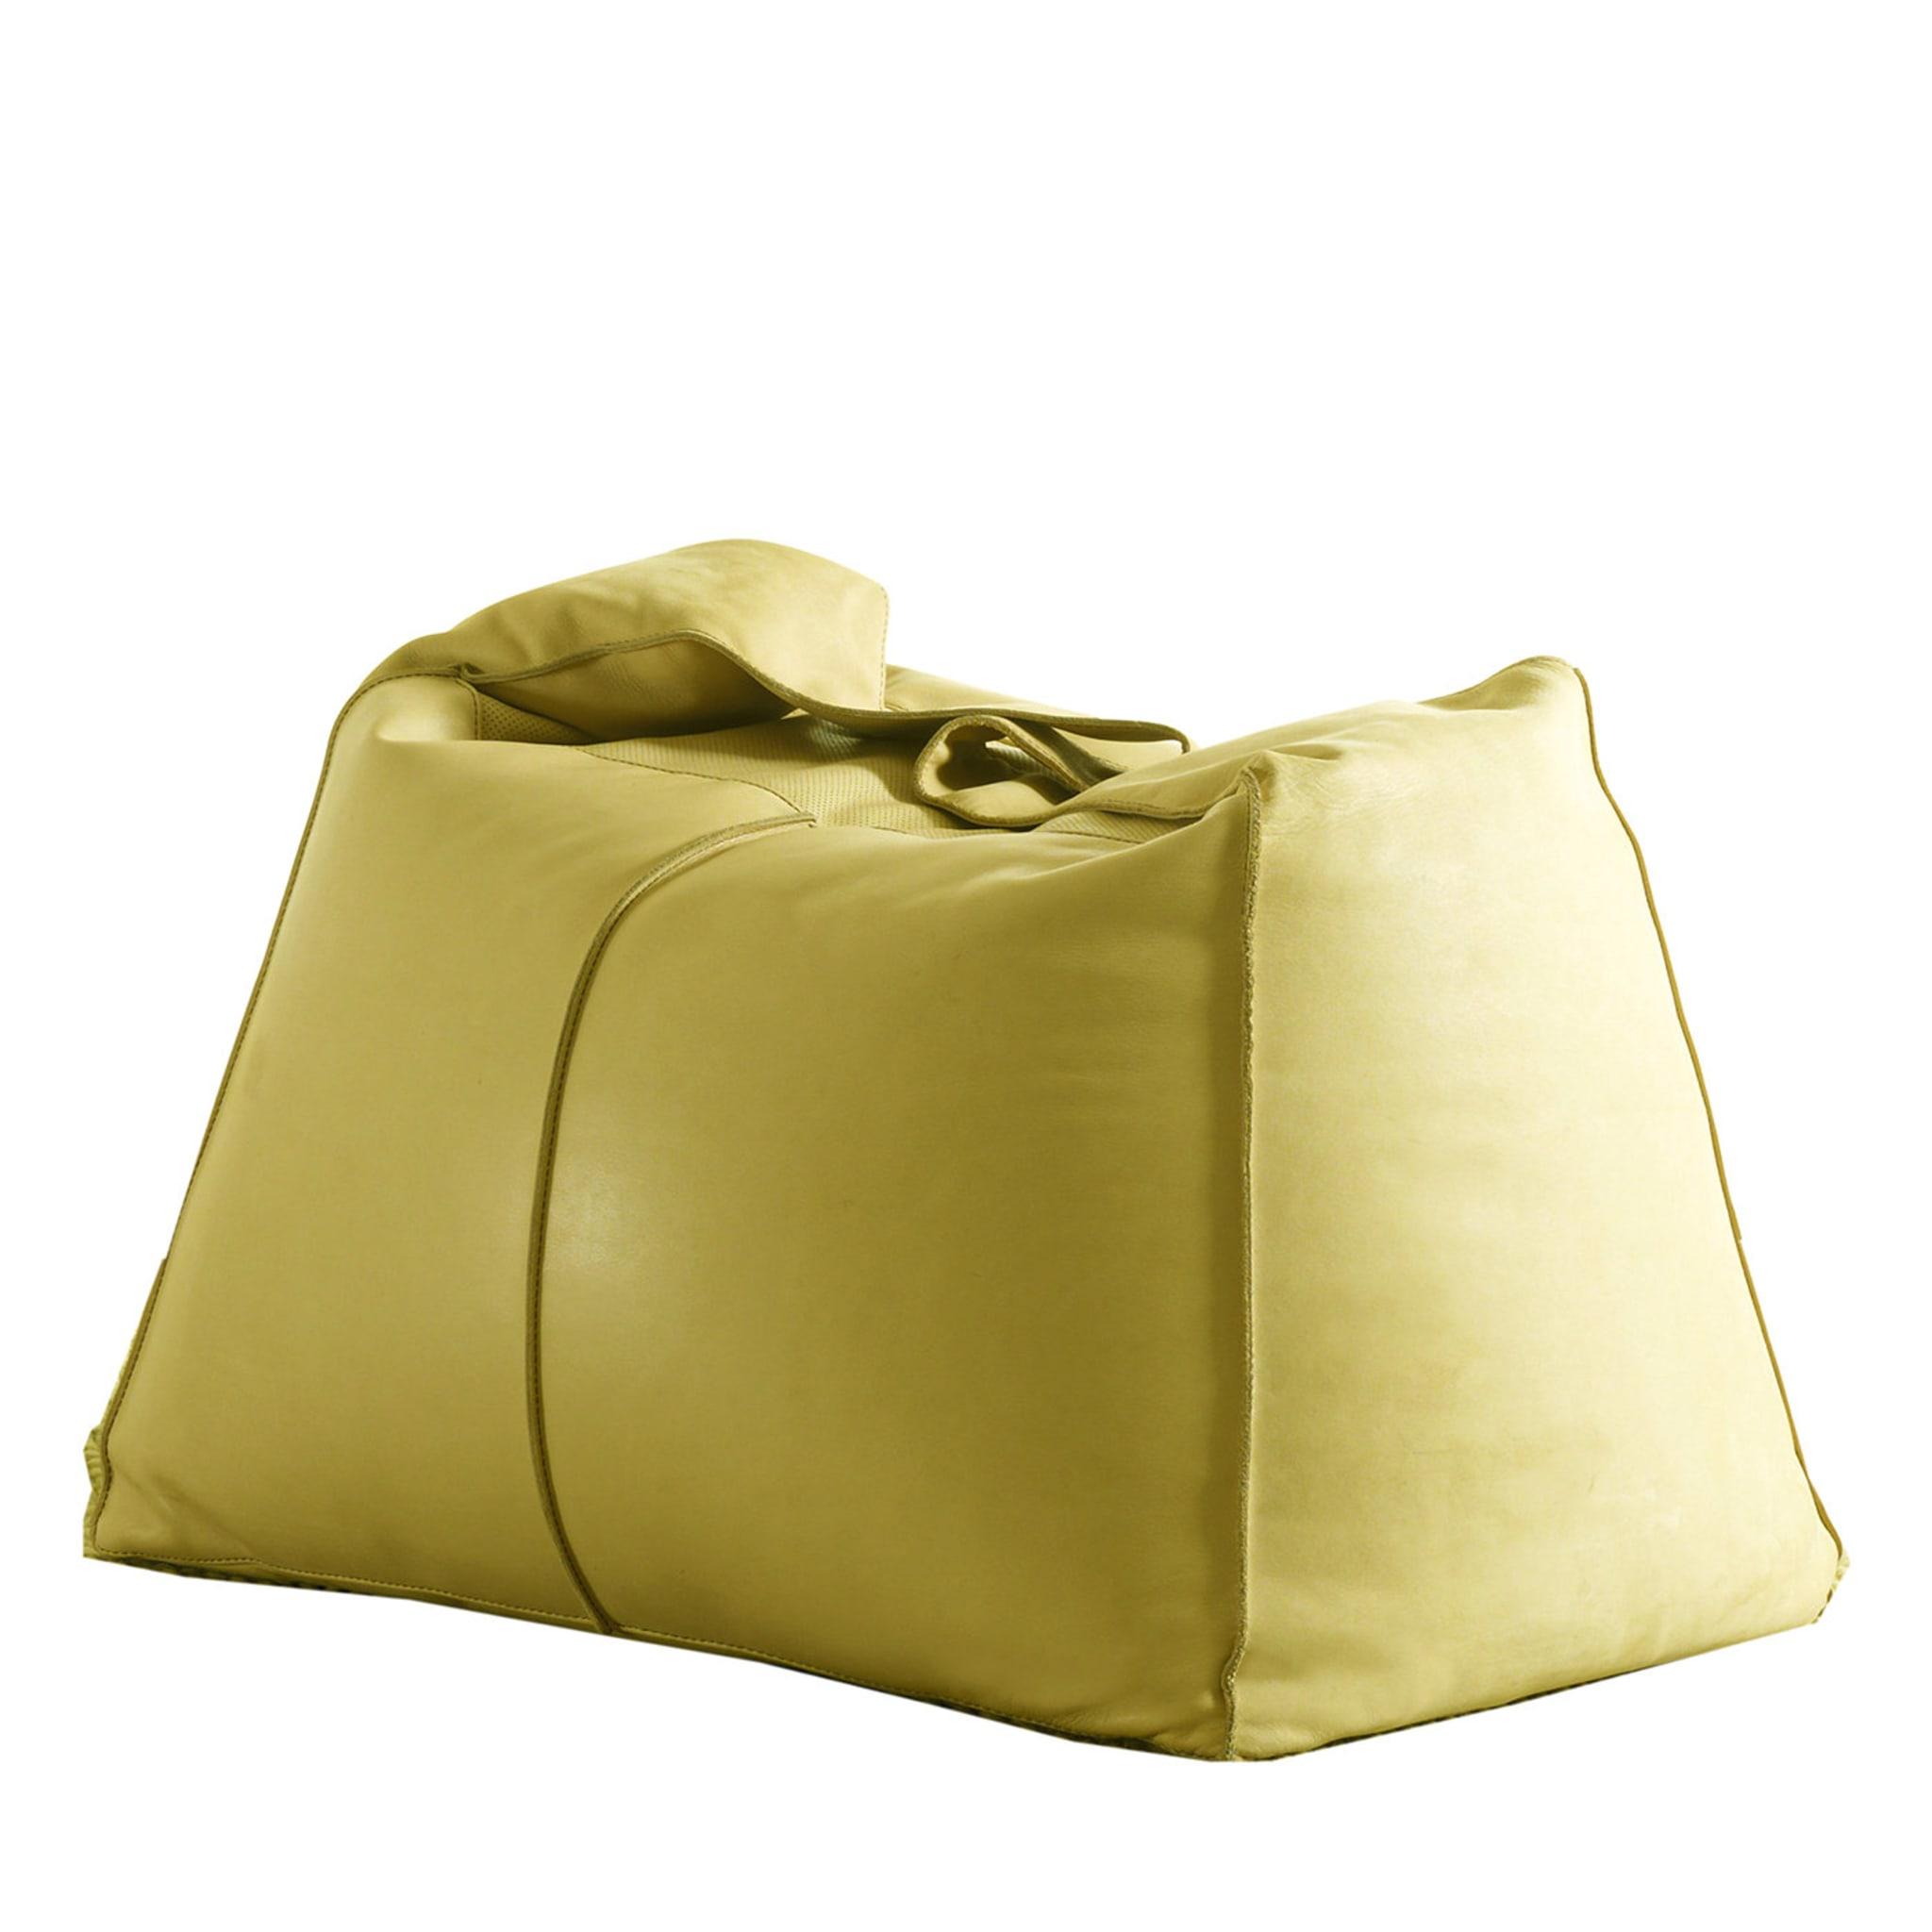 Yellow Bean Bag Chairs